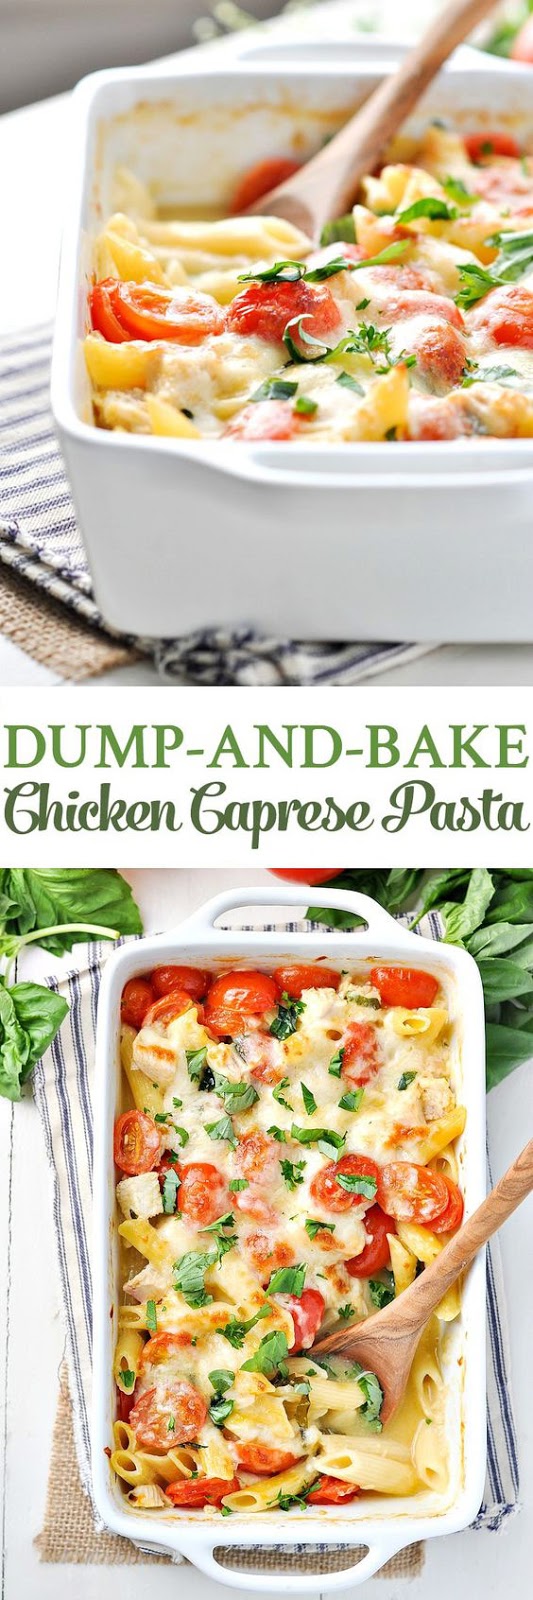 Dump-and-Bake Chicken Caprese Pasta